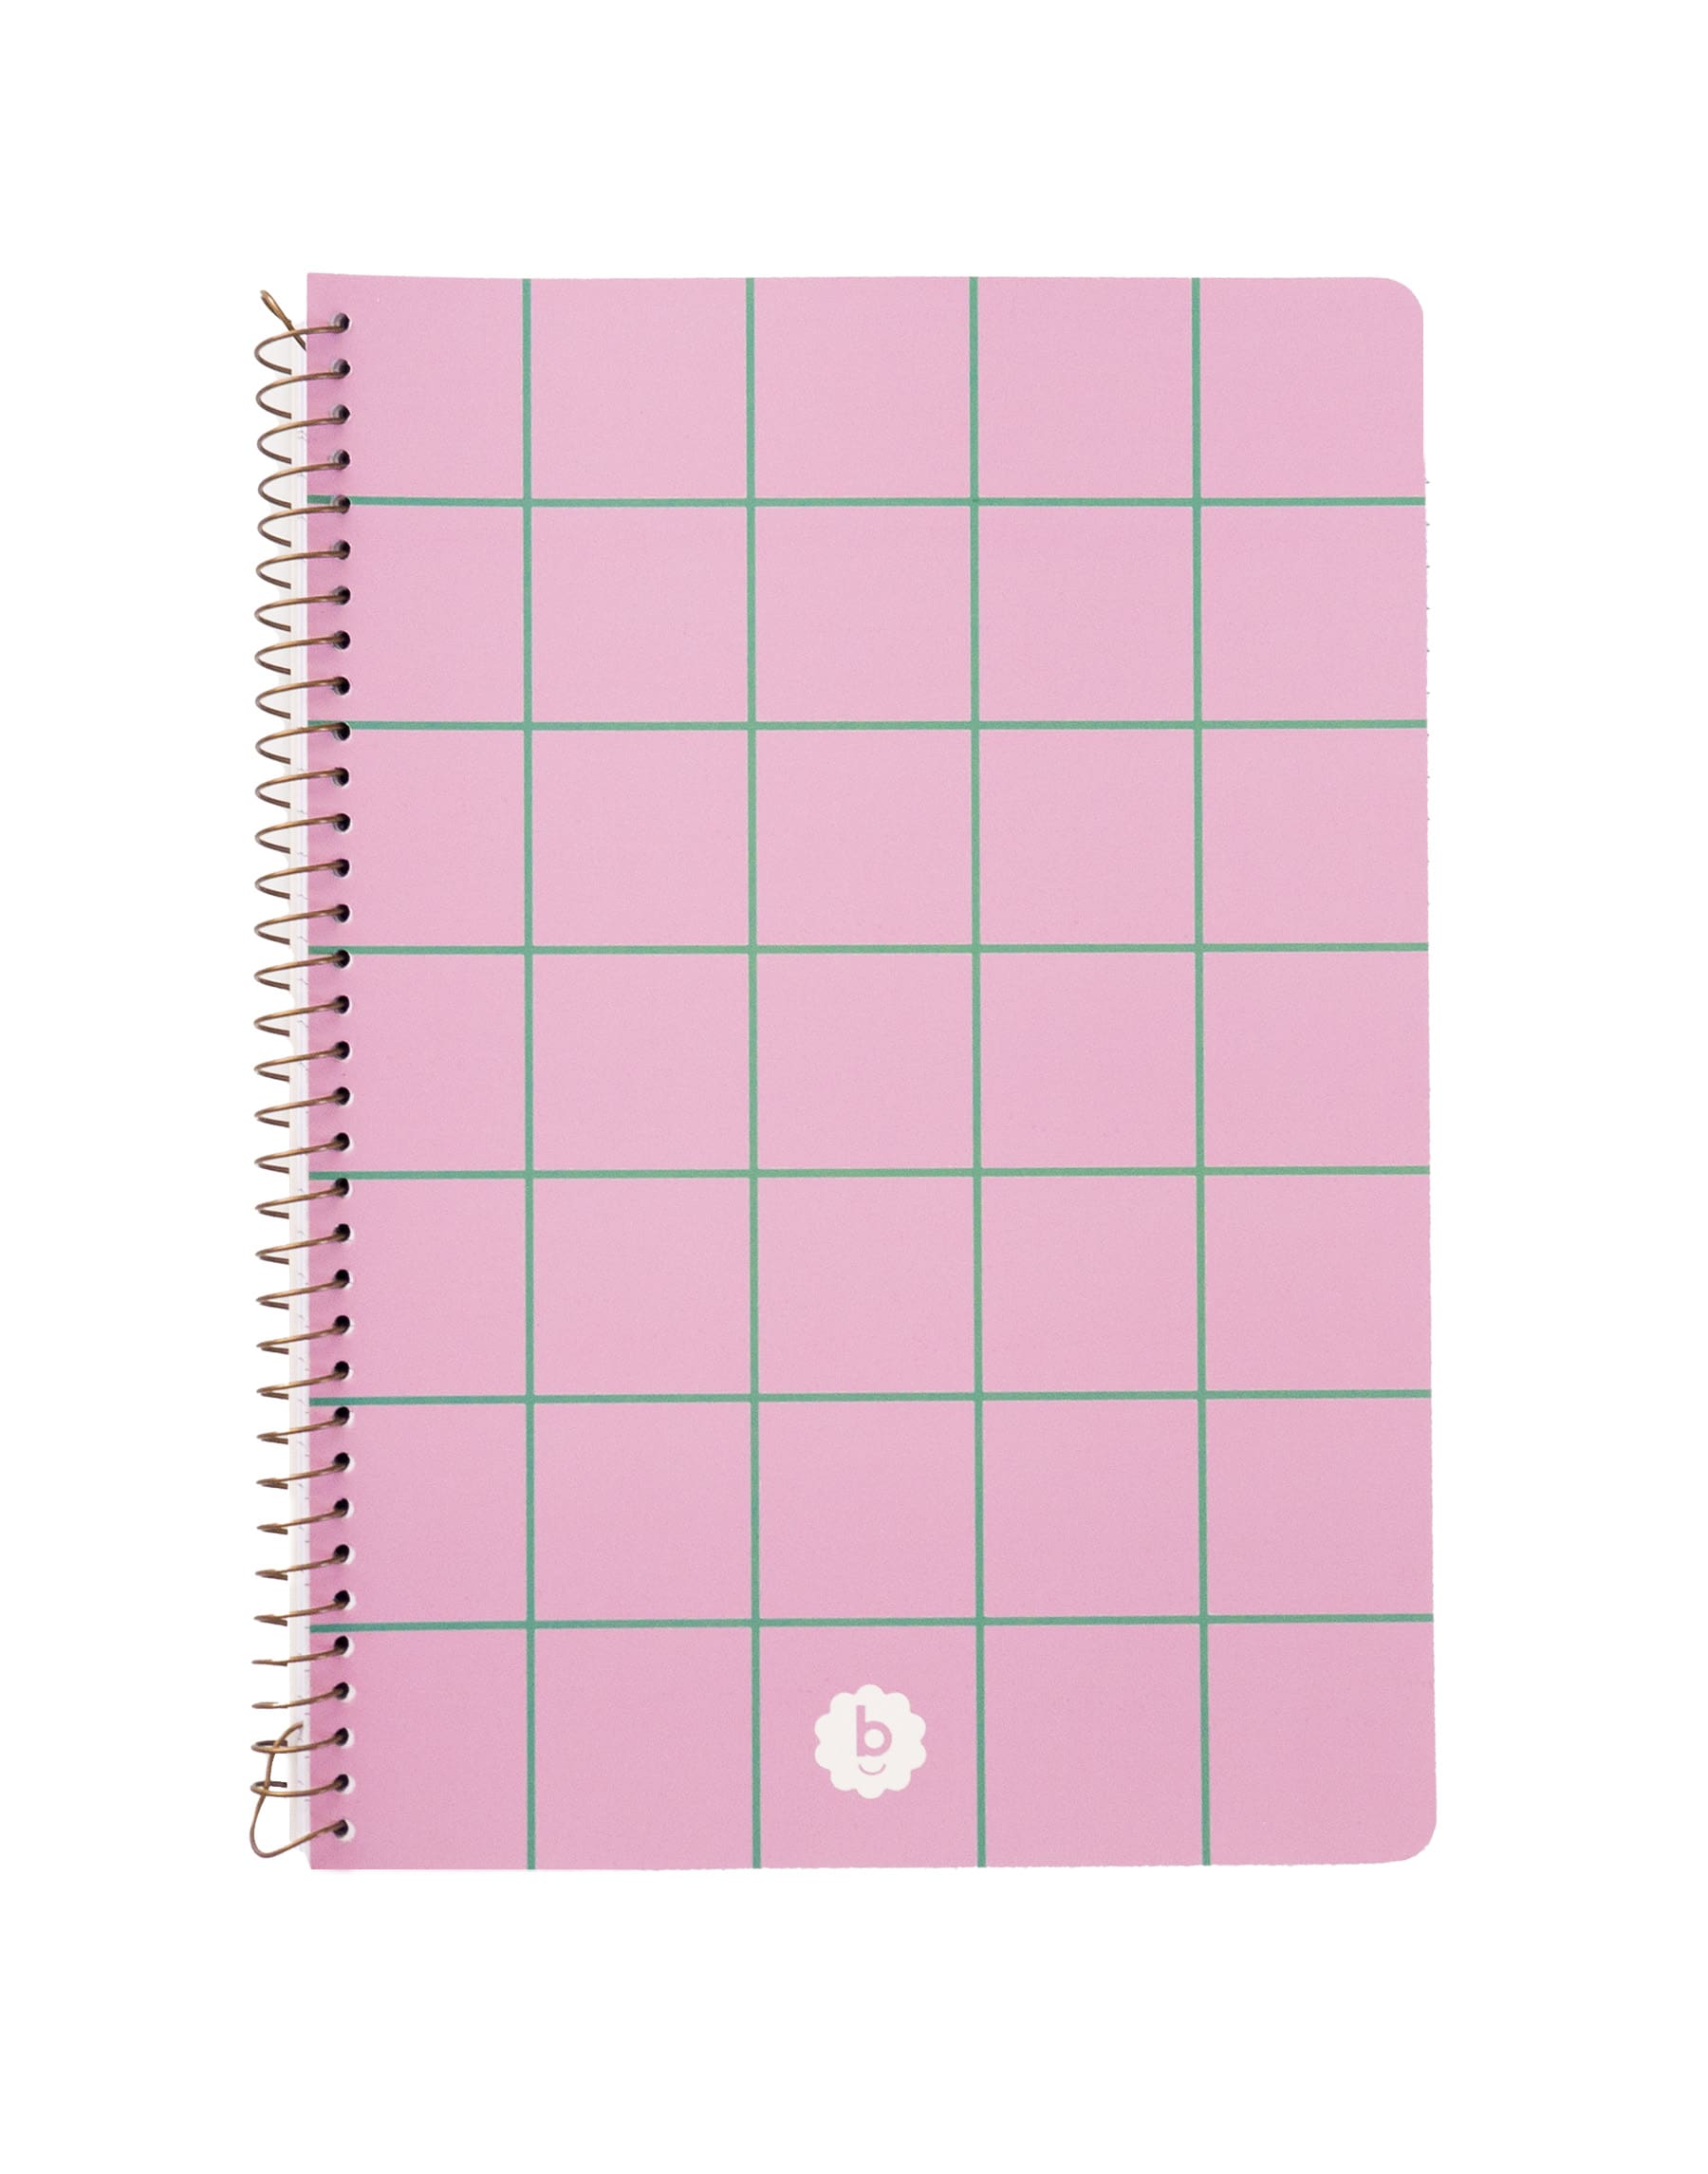 Bondito Notebook Set – Back to school :) – Eucalyptus